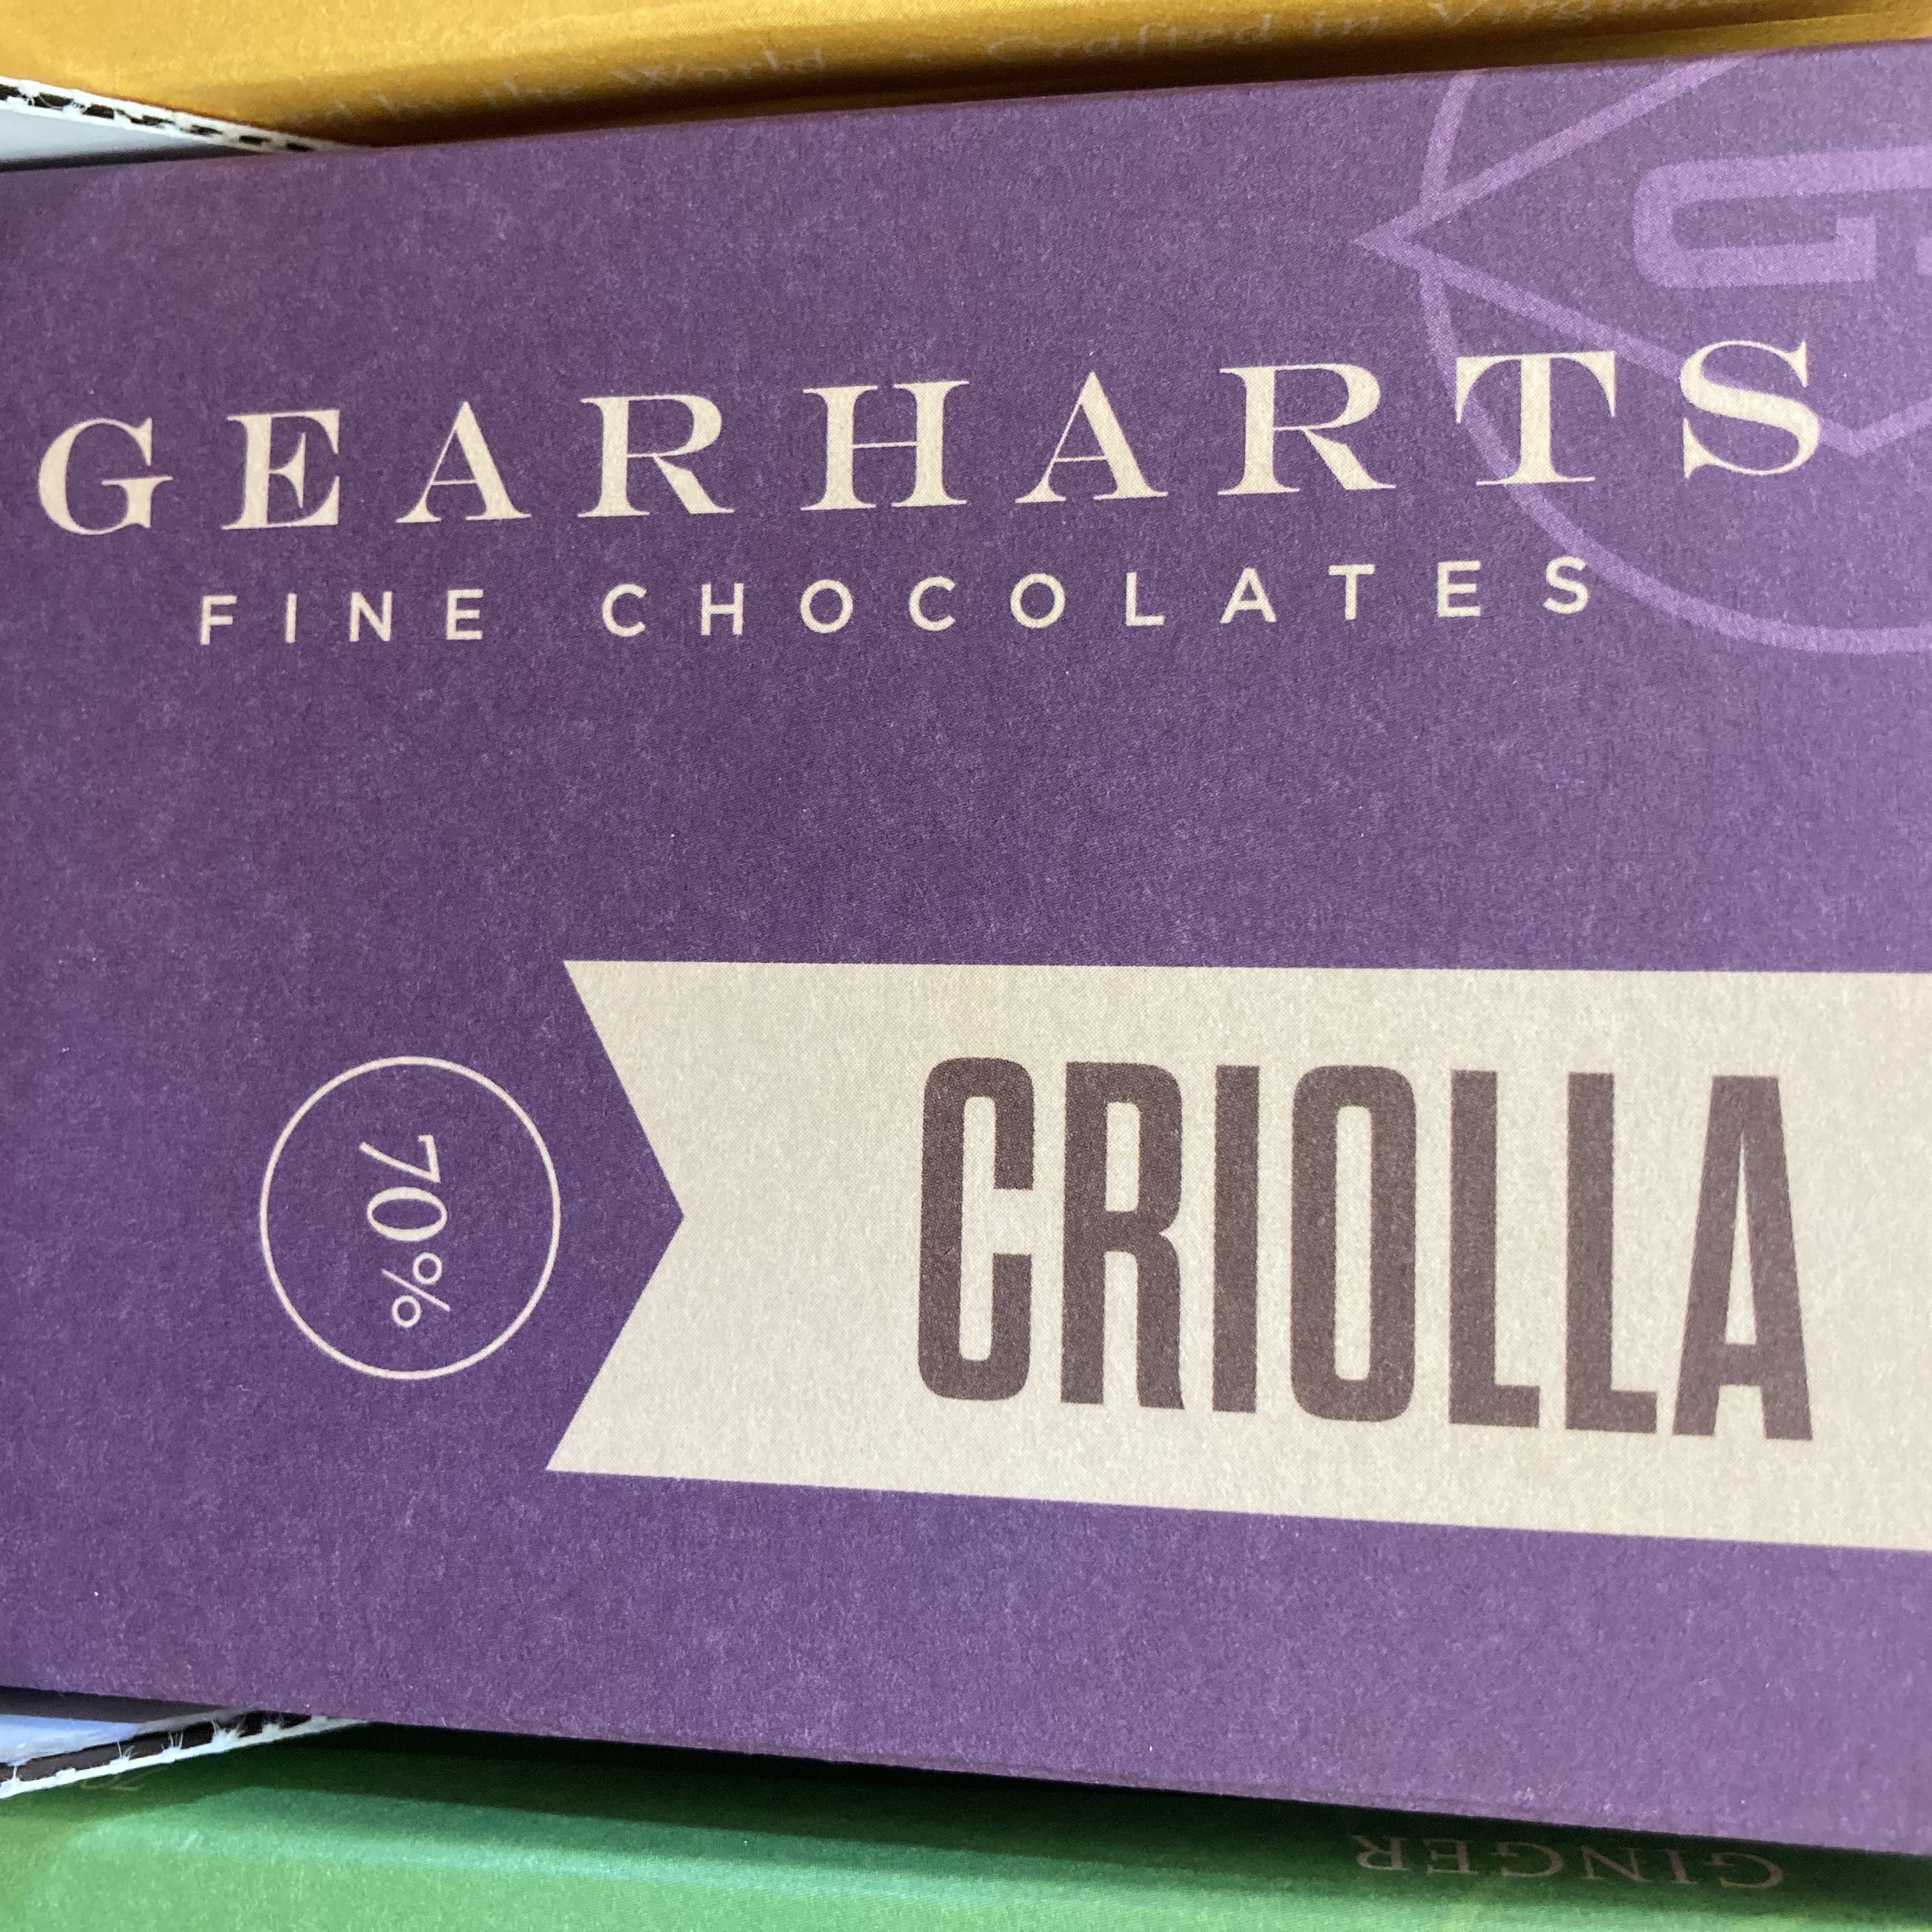 Gearharts Criolla Chocolate Bar